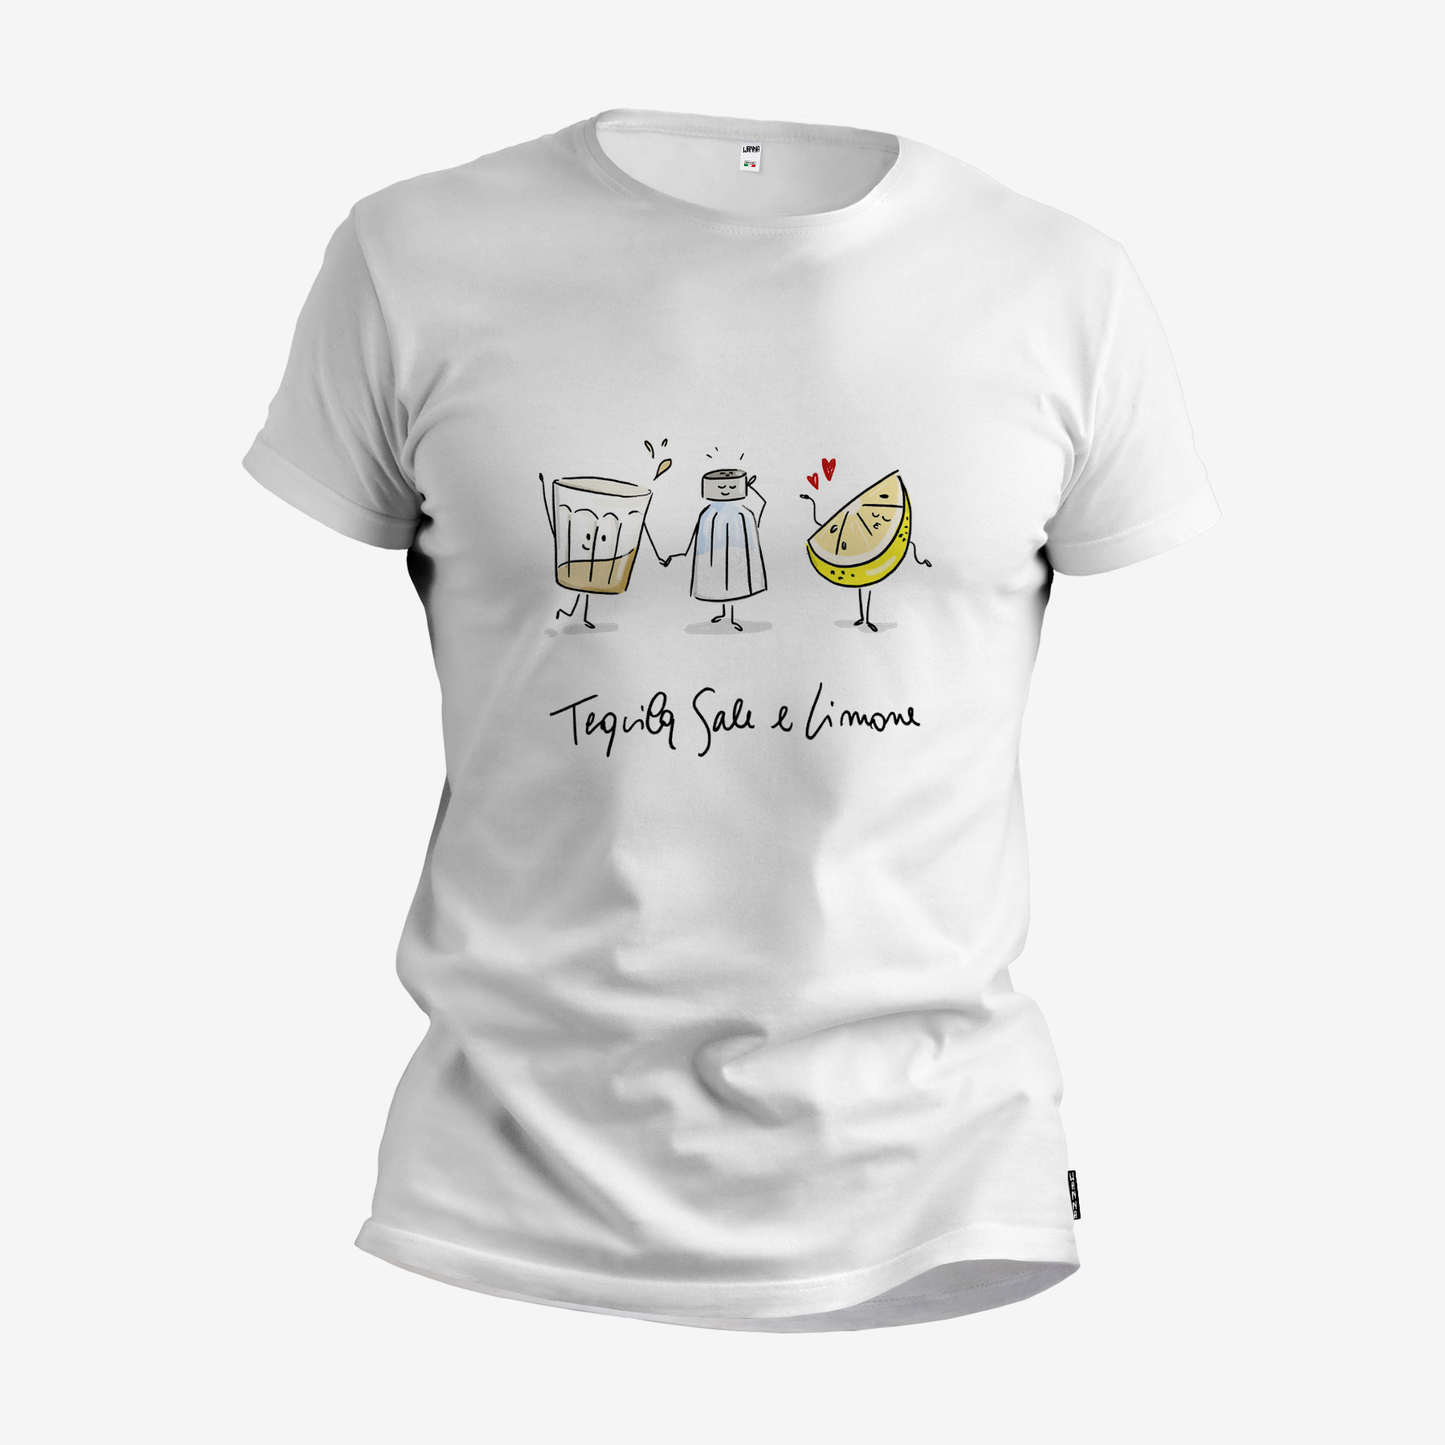 Tequila, Sale e Limone - T-Shirt Uomo